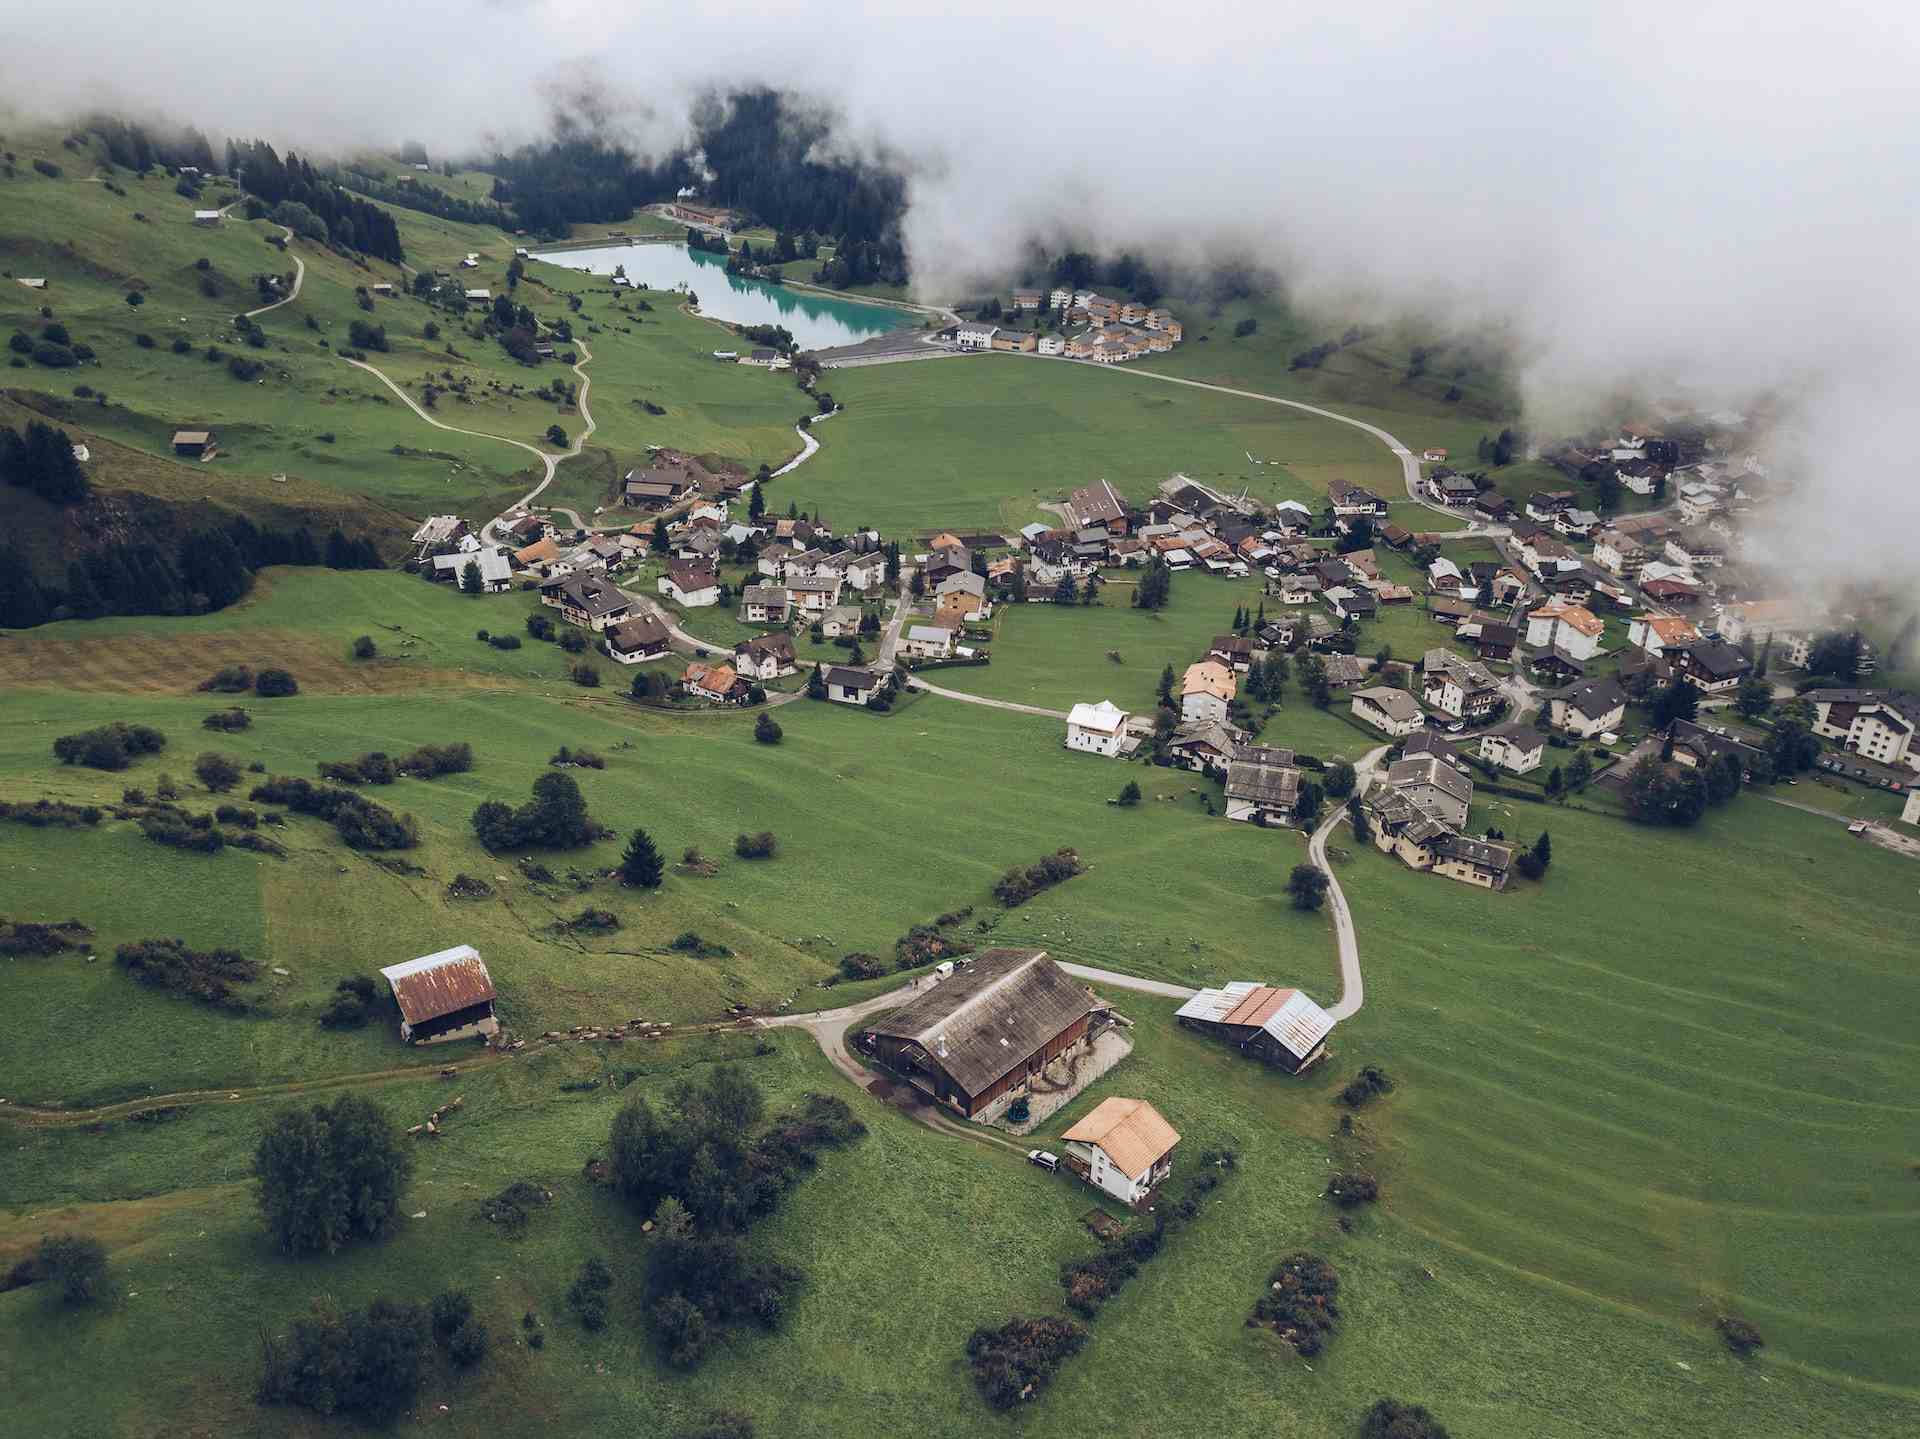 Hellmüller-Hinderling, producer in Mesocco canton of Grisons in Switzerland, | Mimelis